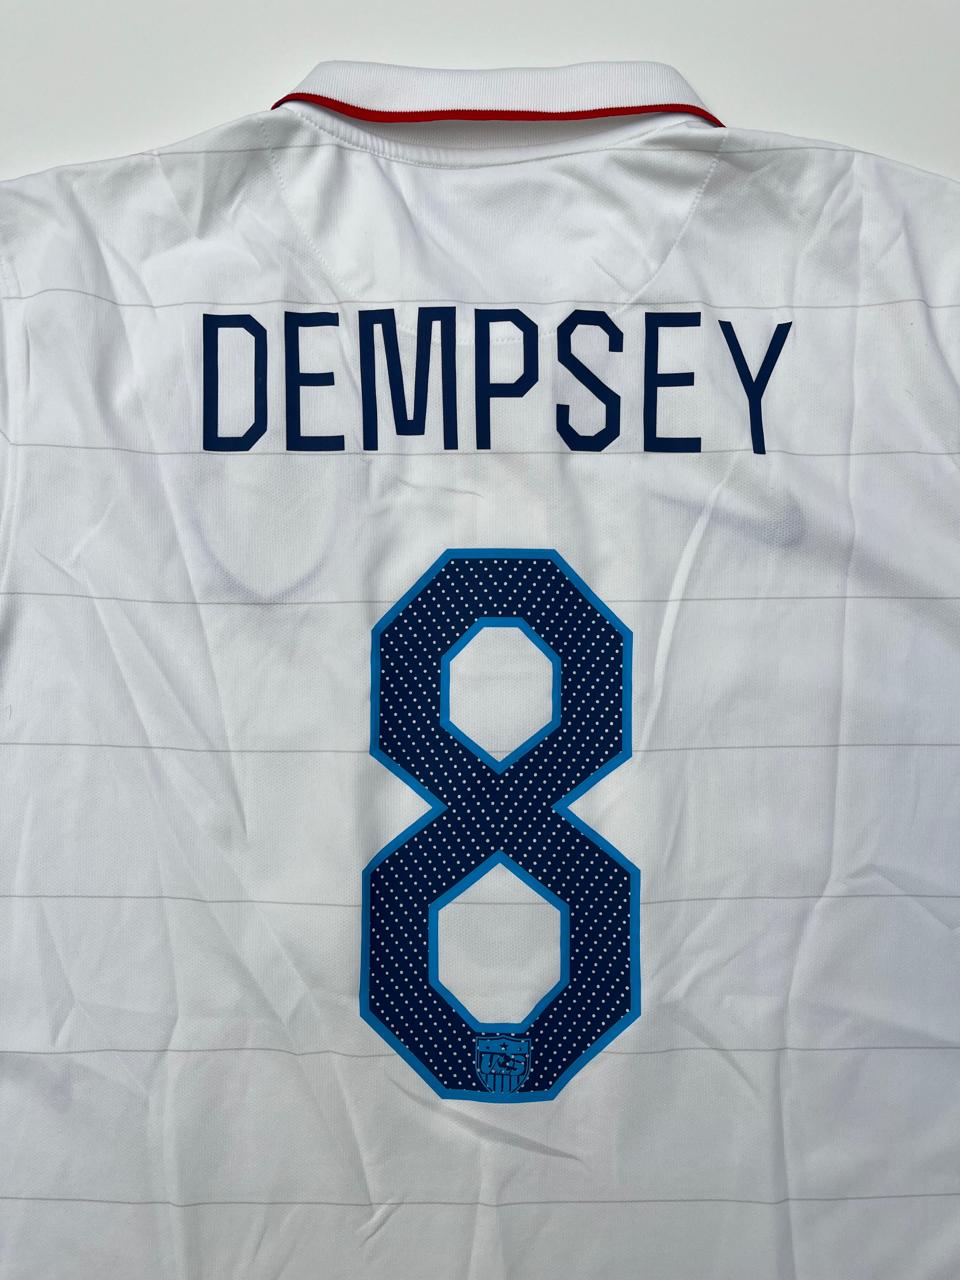 Jersey Estados Unidos 2014 2015 Local Clint Dempsey (L)